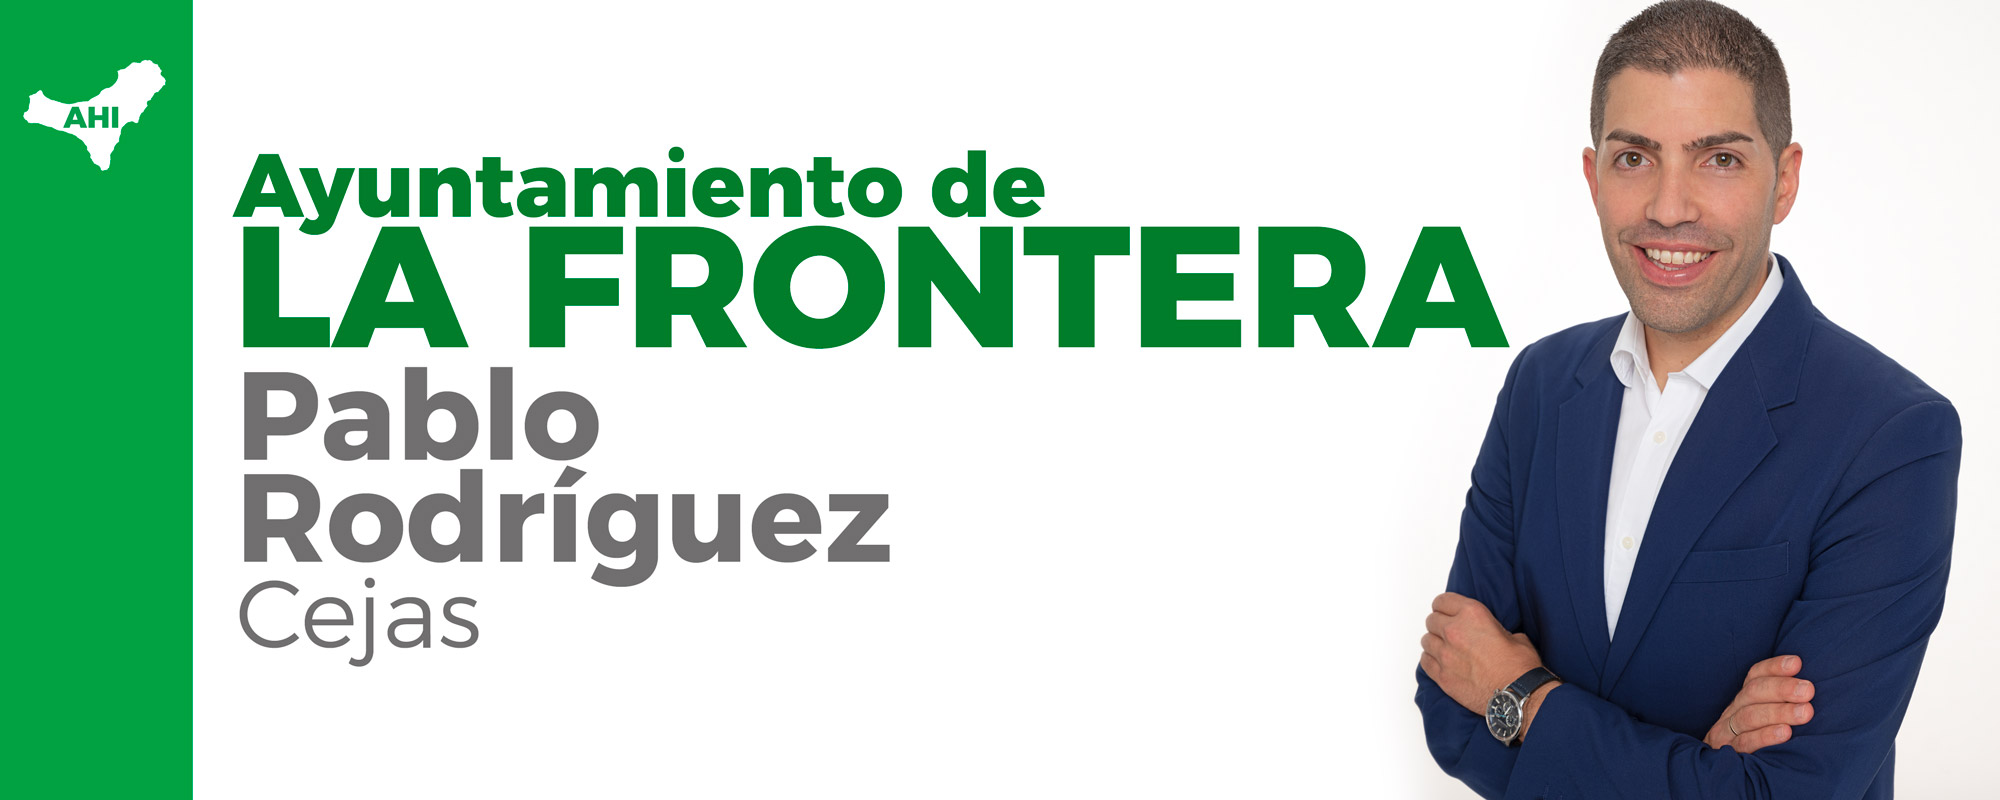 AHI-Agrupación-Herreña-Independiente-Banner-Frontera-01